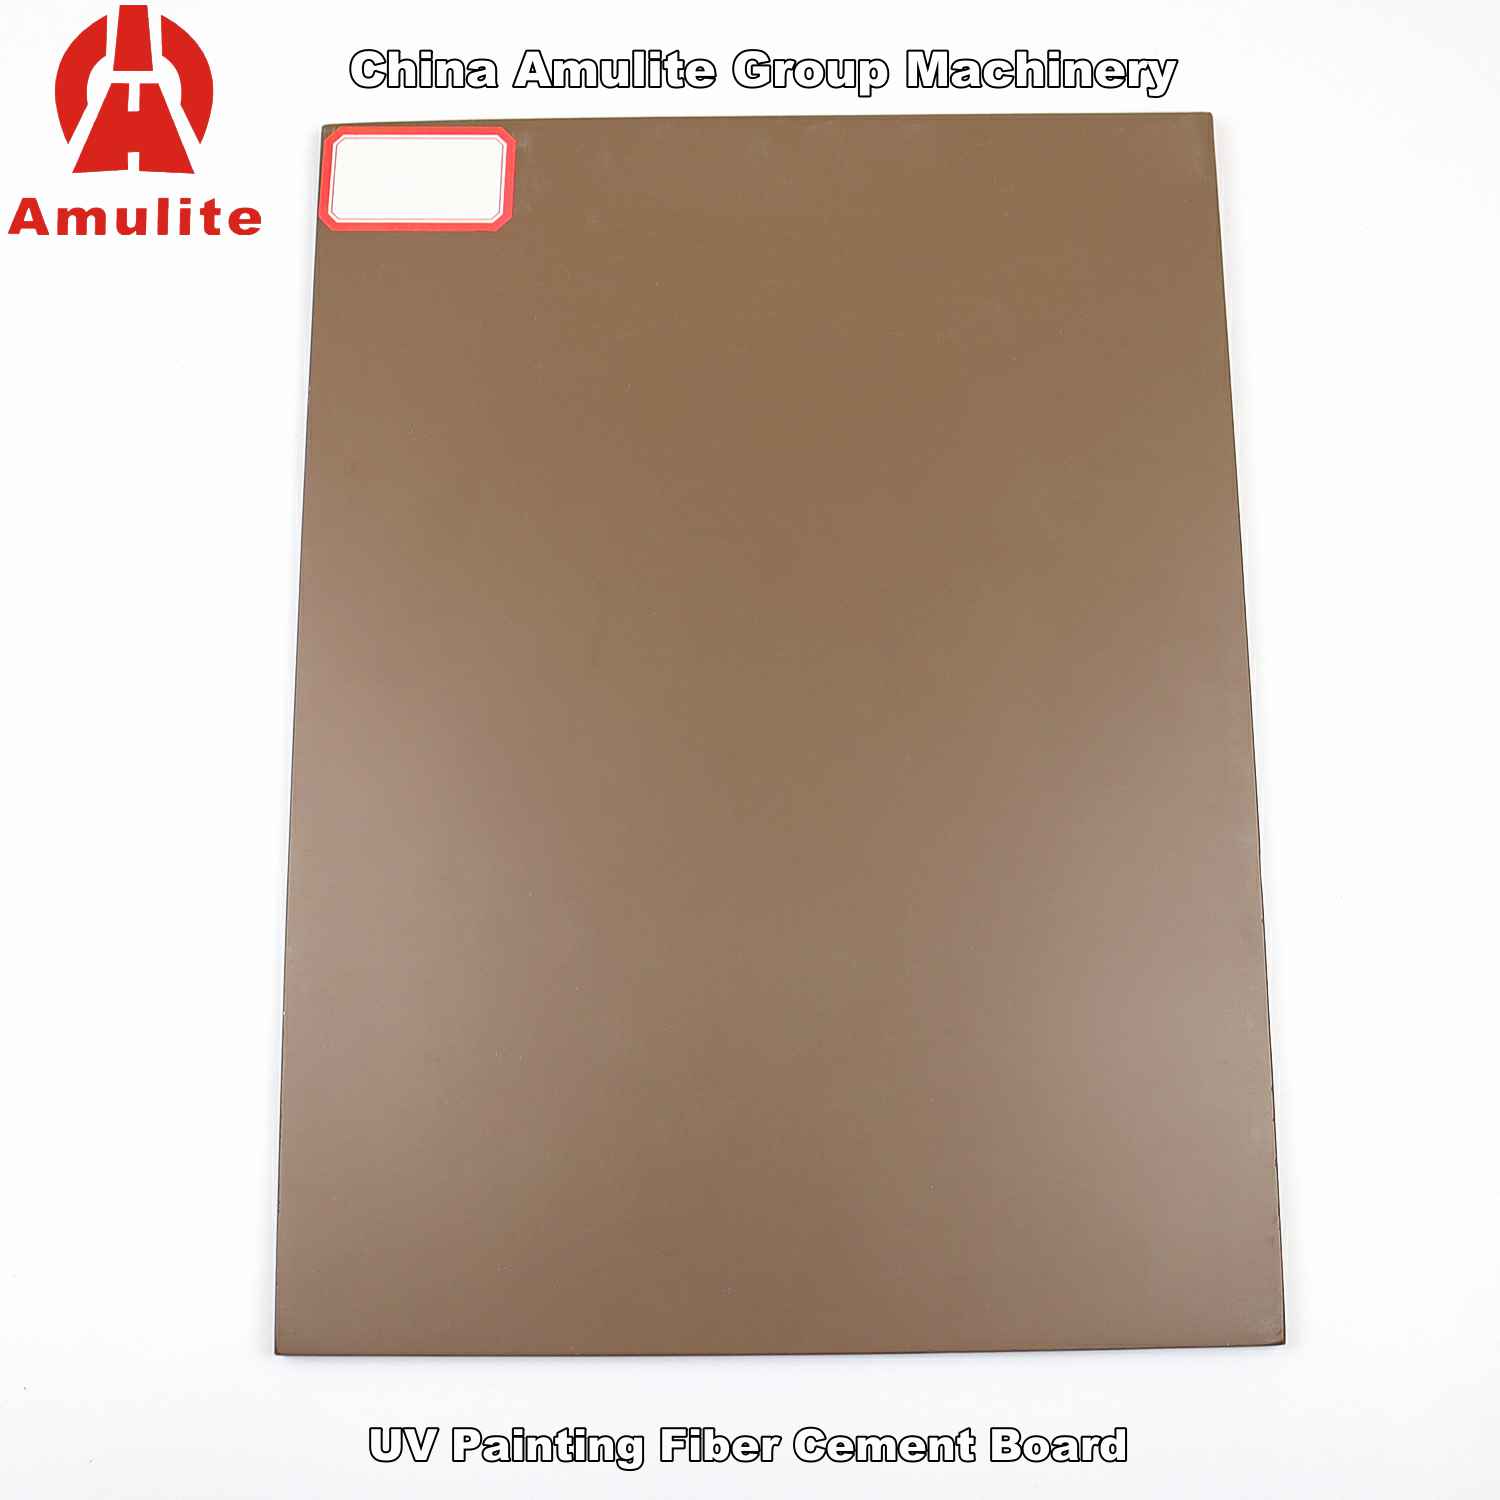 UV Painting Fiber Cement Board (5)